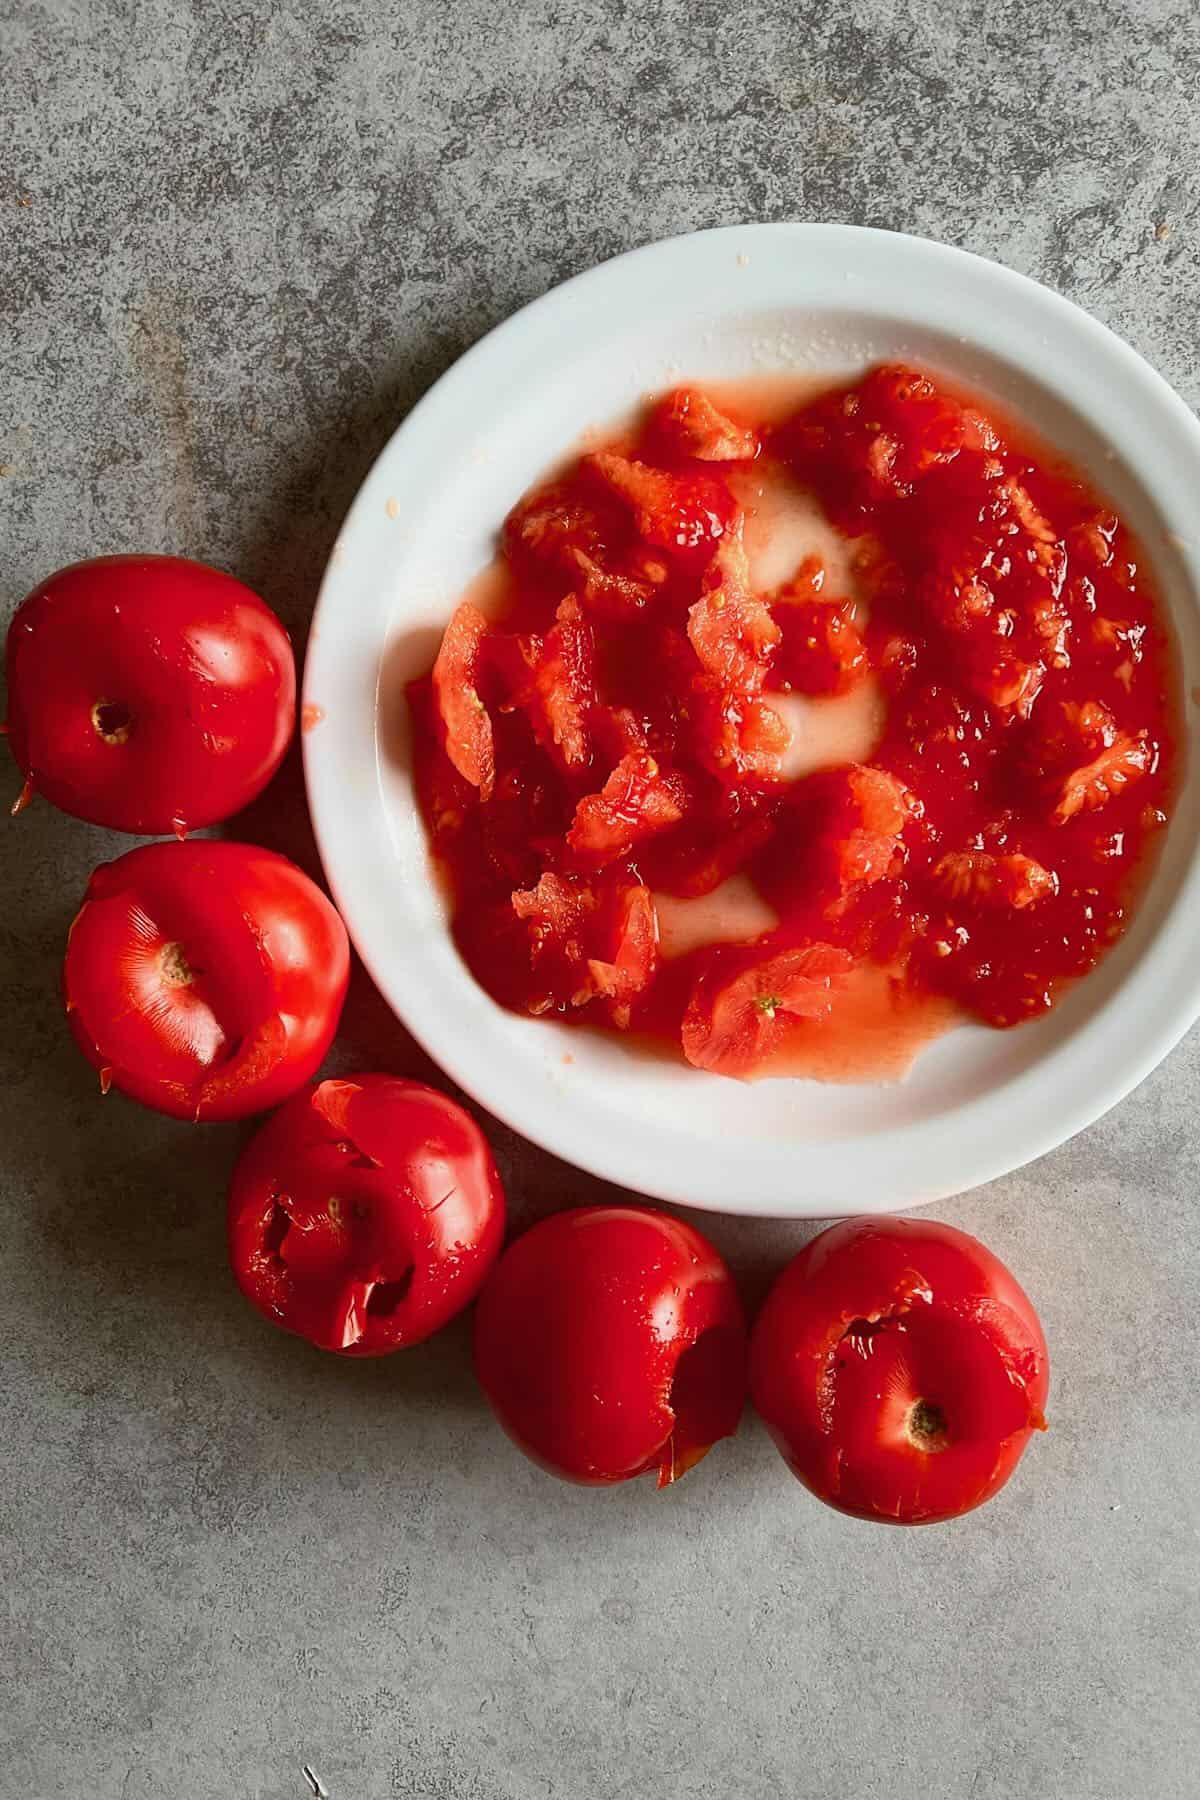 Cored tomatoes